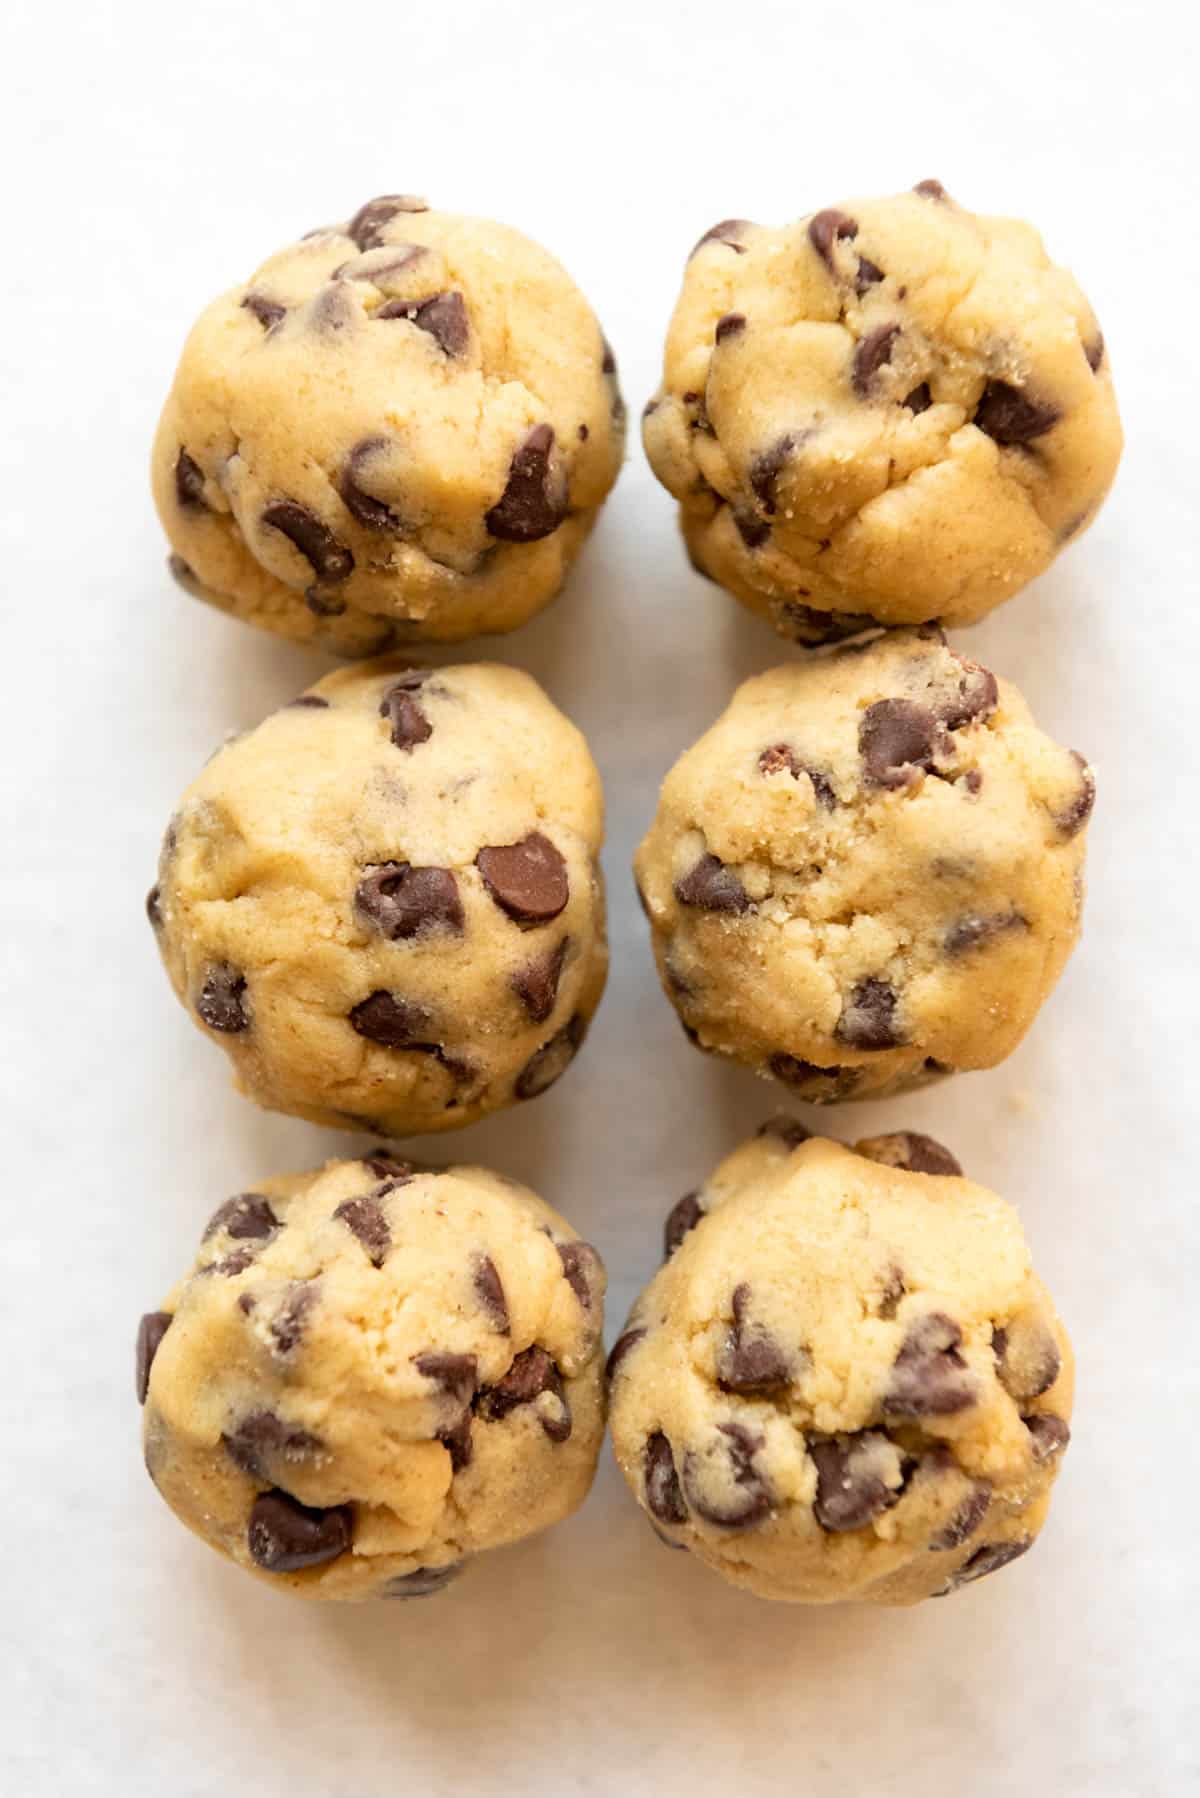 Six balls of homemade chocolate chip cookie dough.